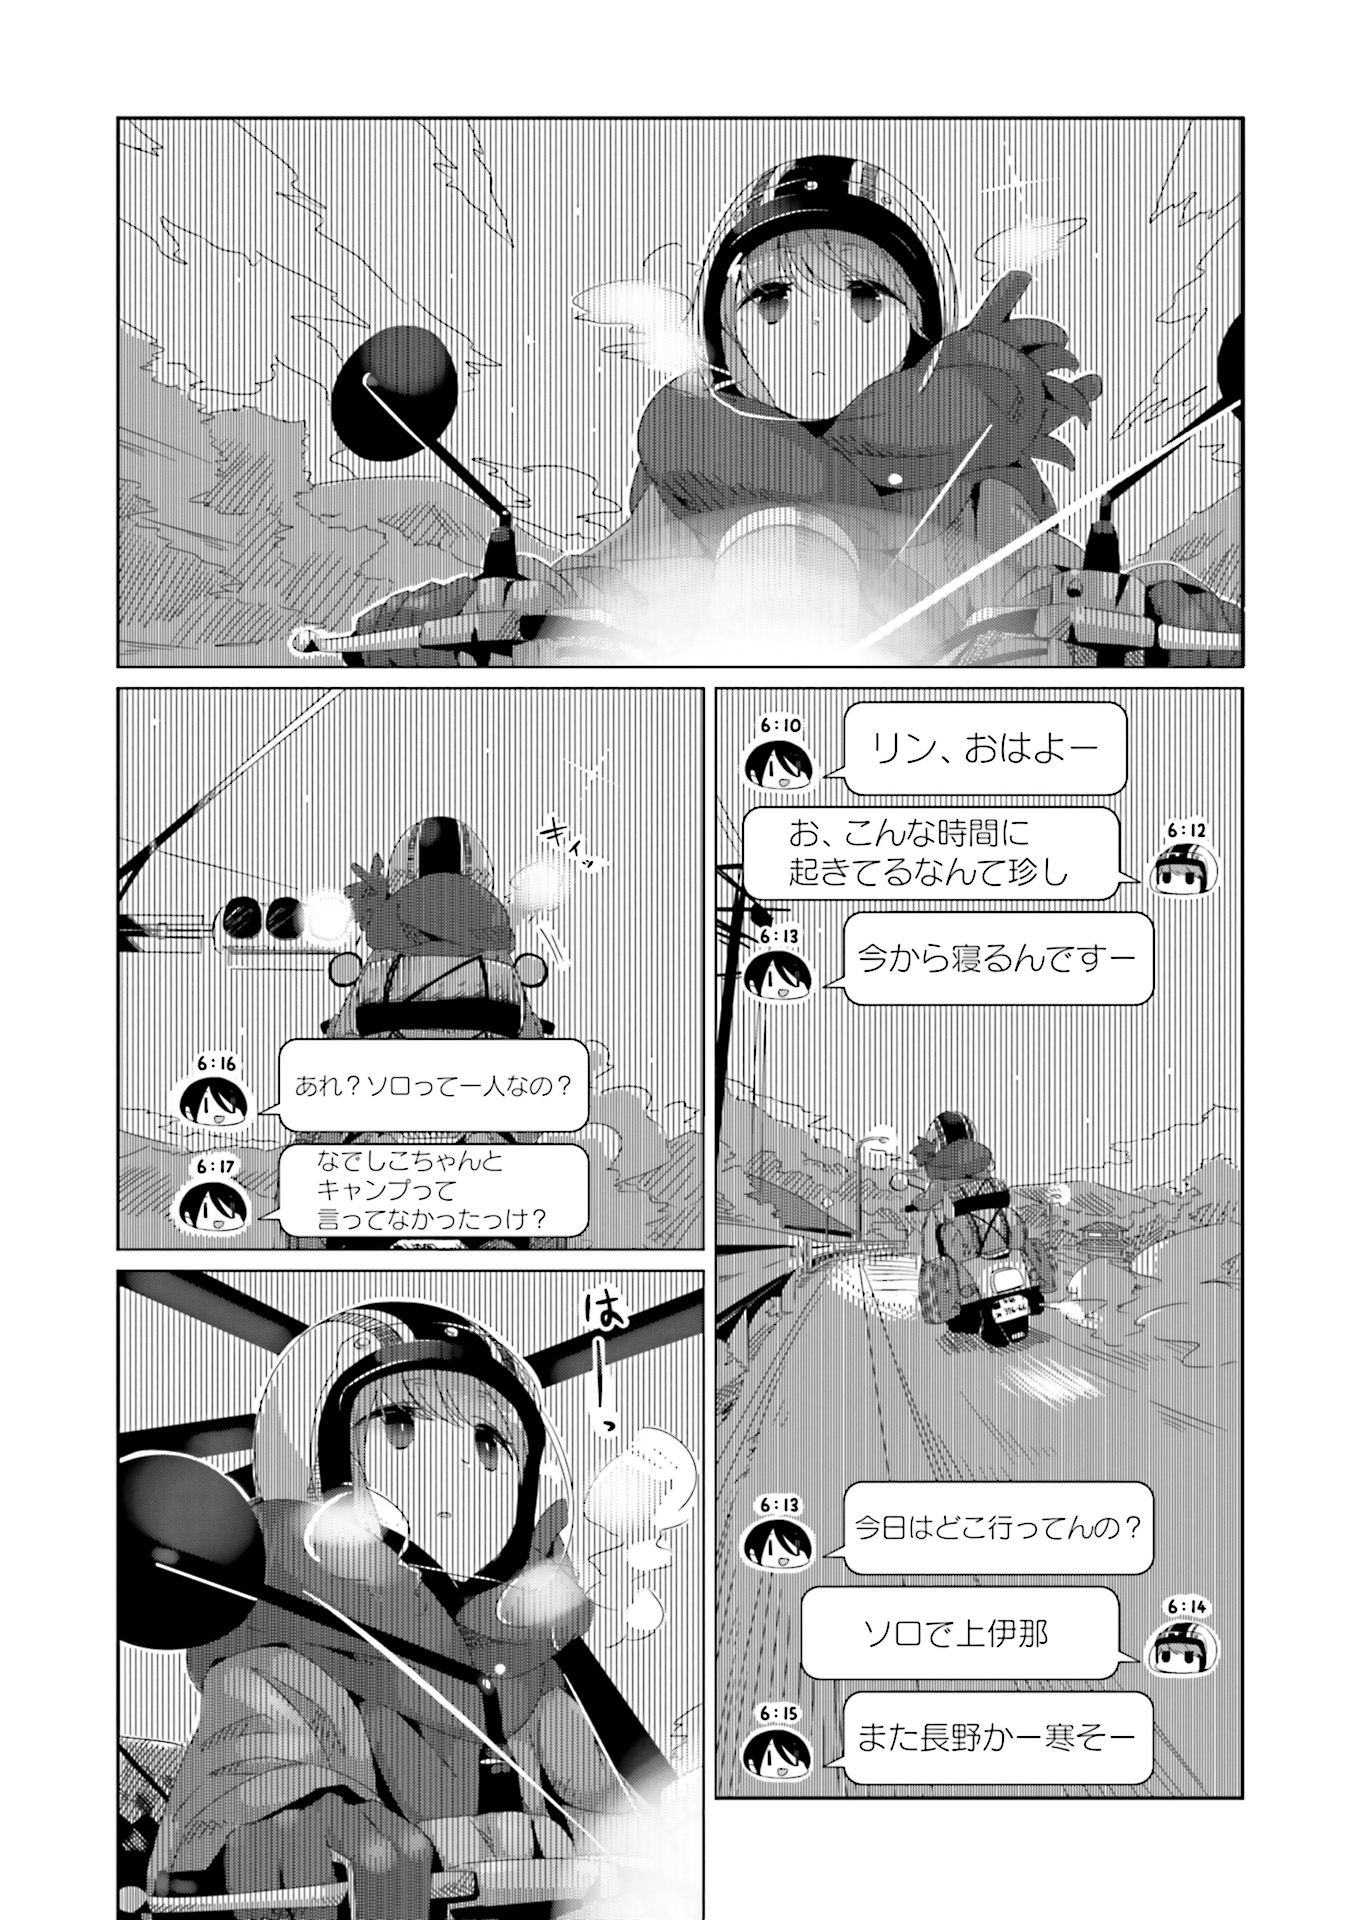 Yuru Camp - Chapter 15 - Page 1